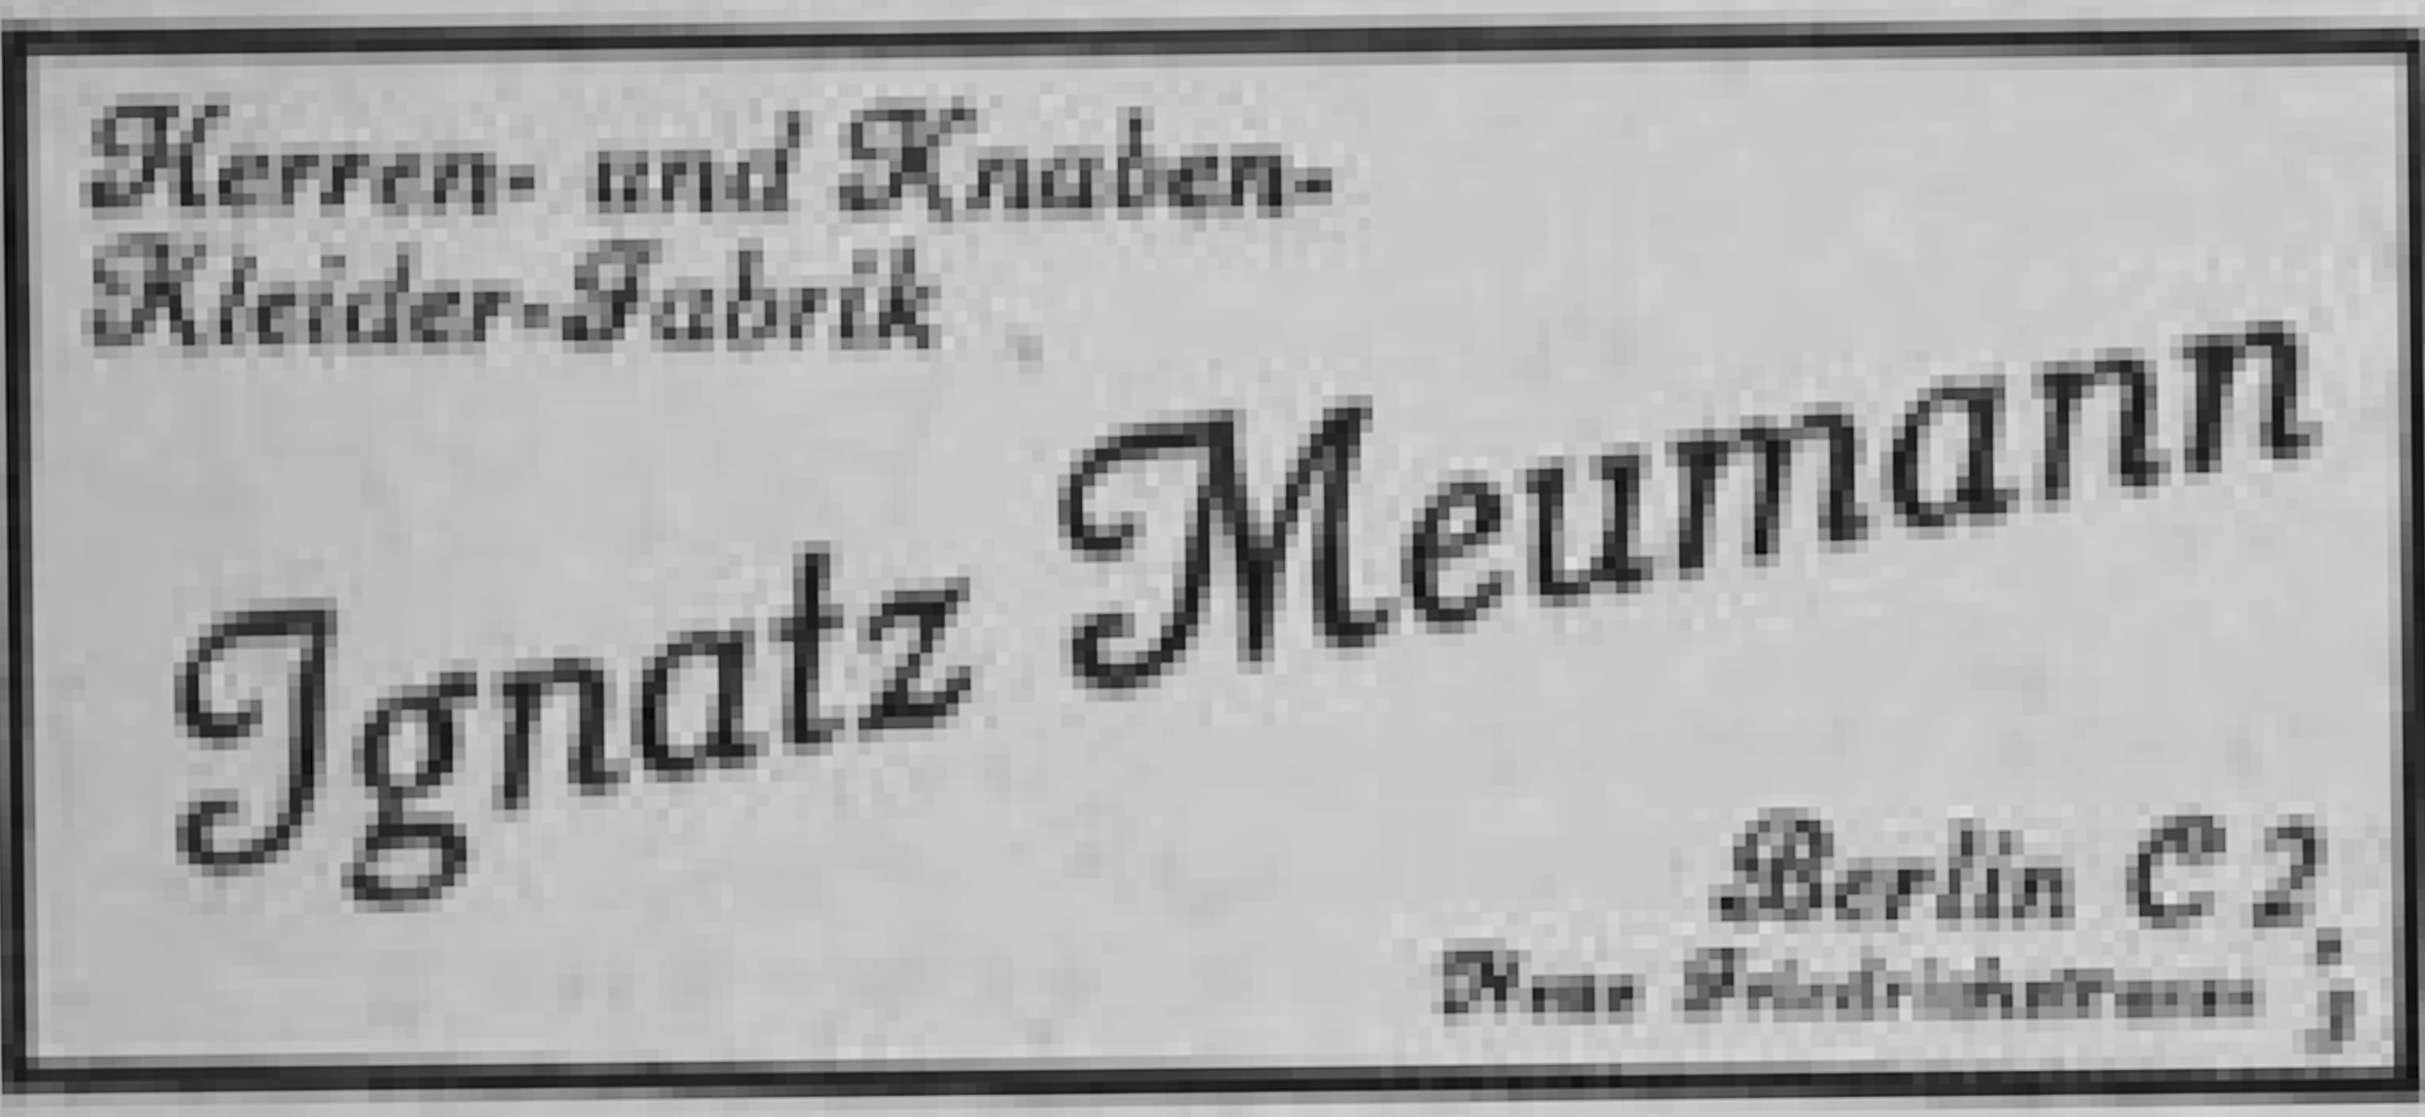 Ad copy in German for ignatz meumann.